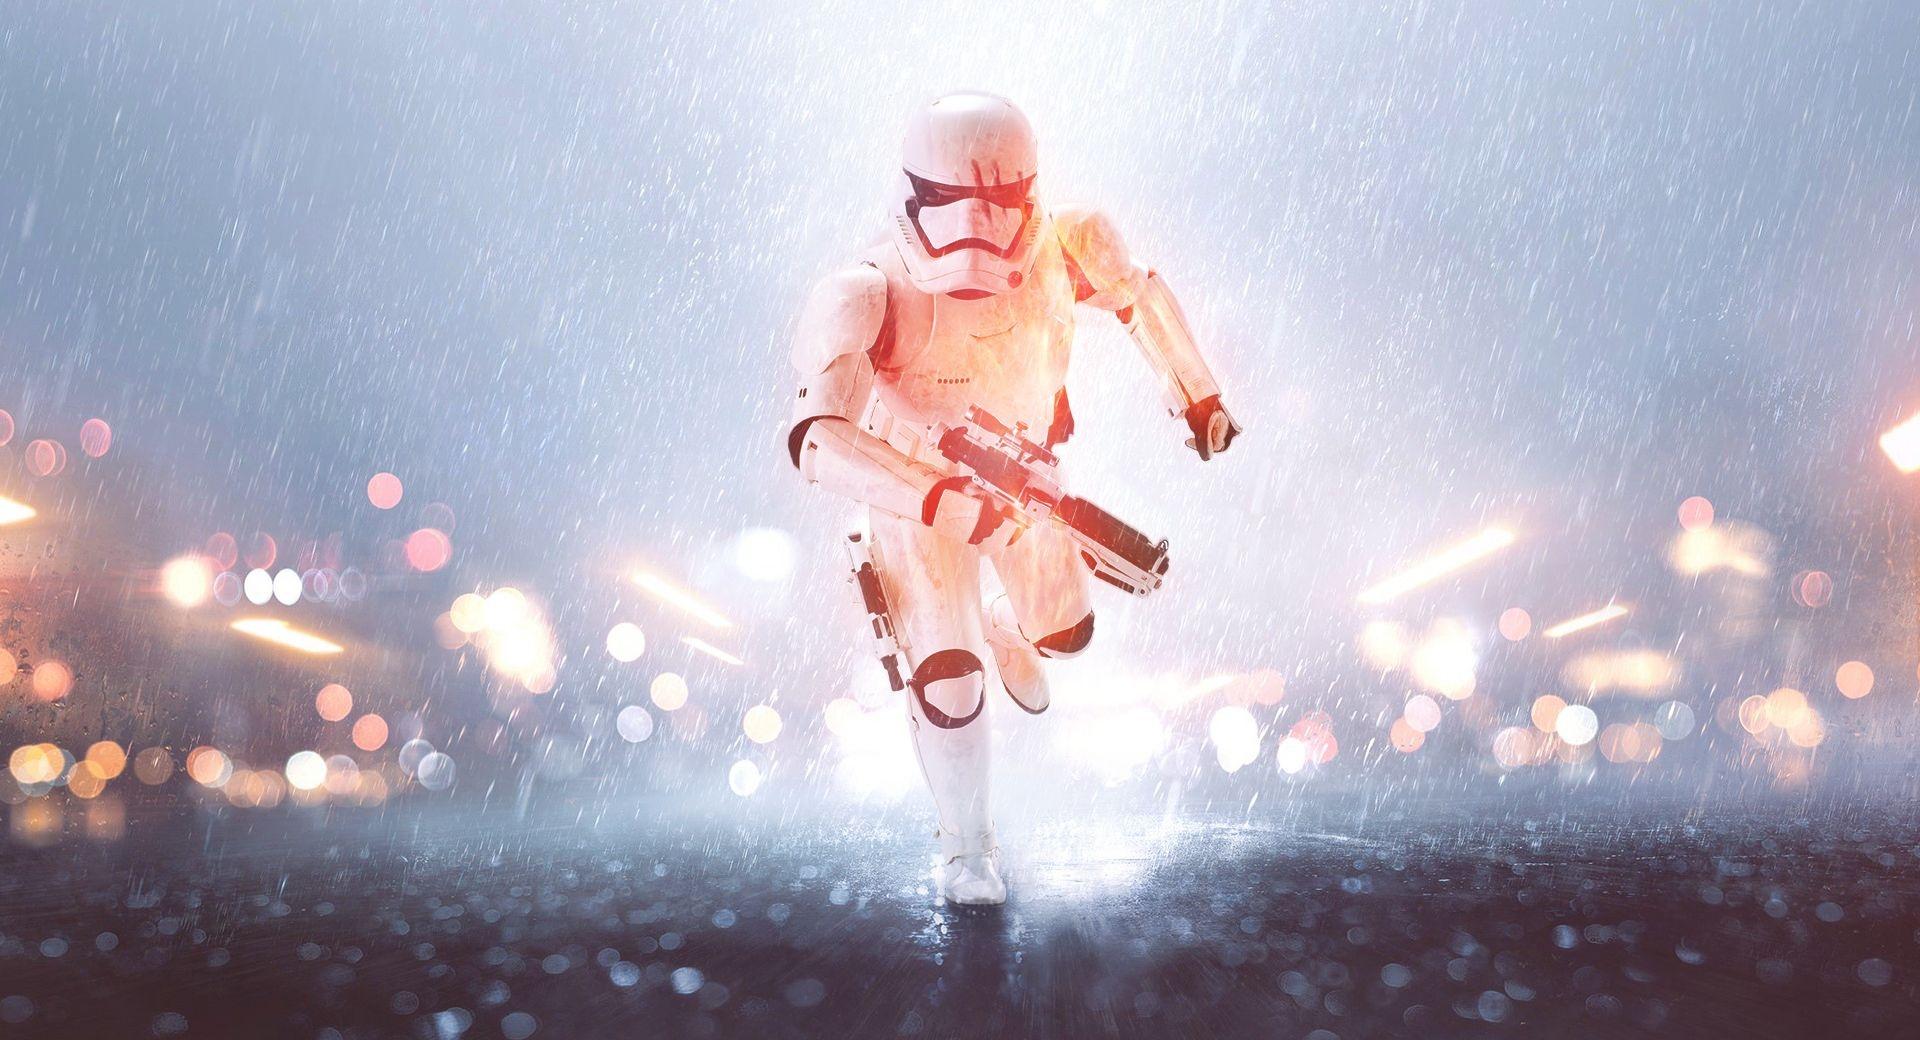 BattleFRONT 1 TFA - Storm Trooper Finn wallpapers HD quality